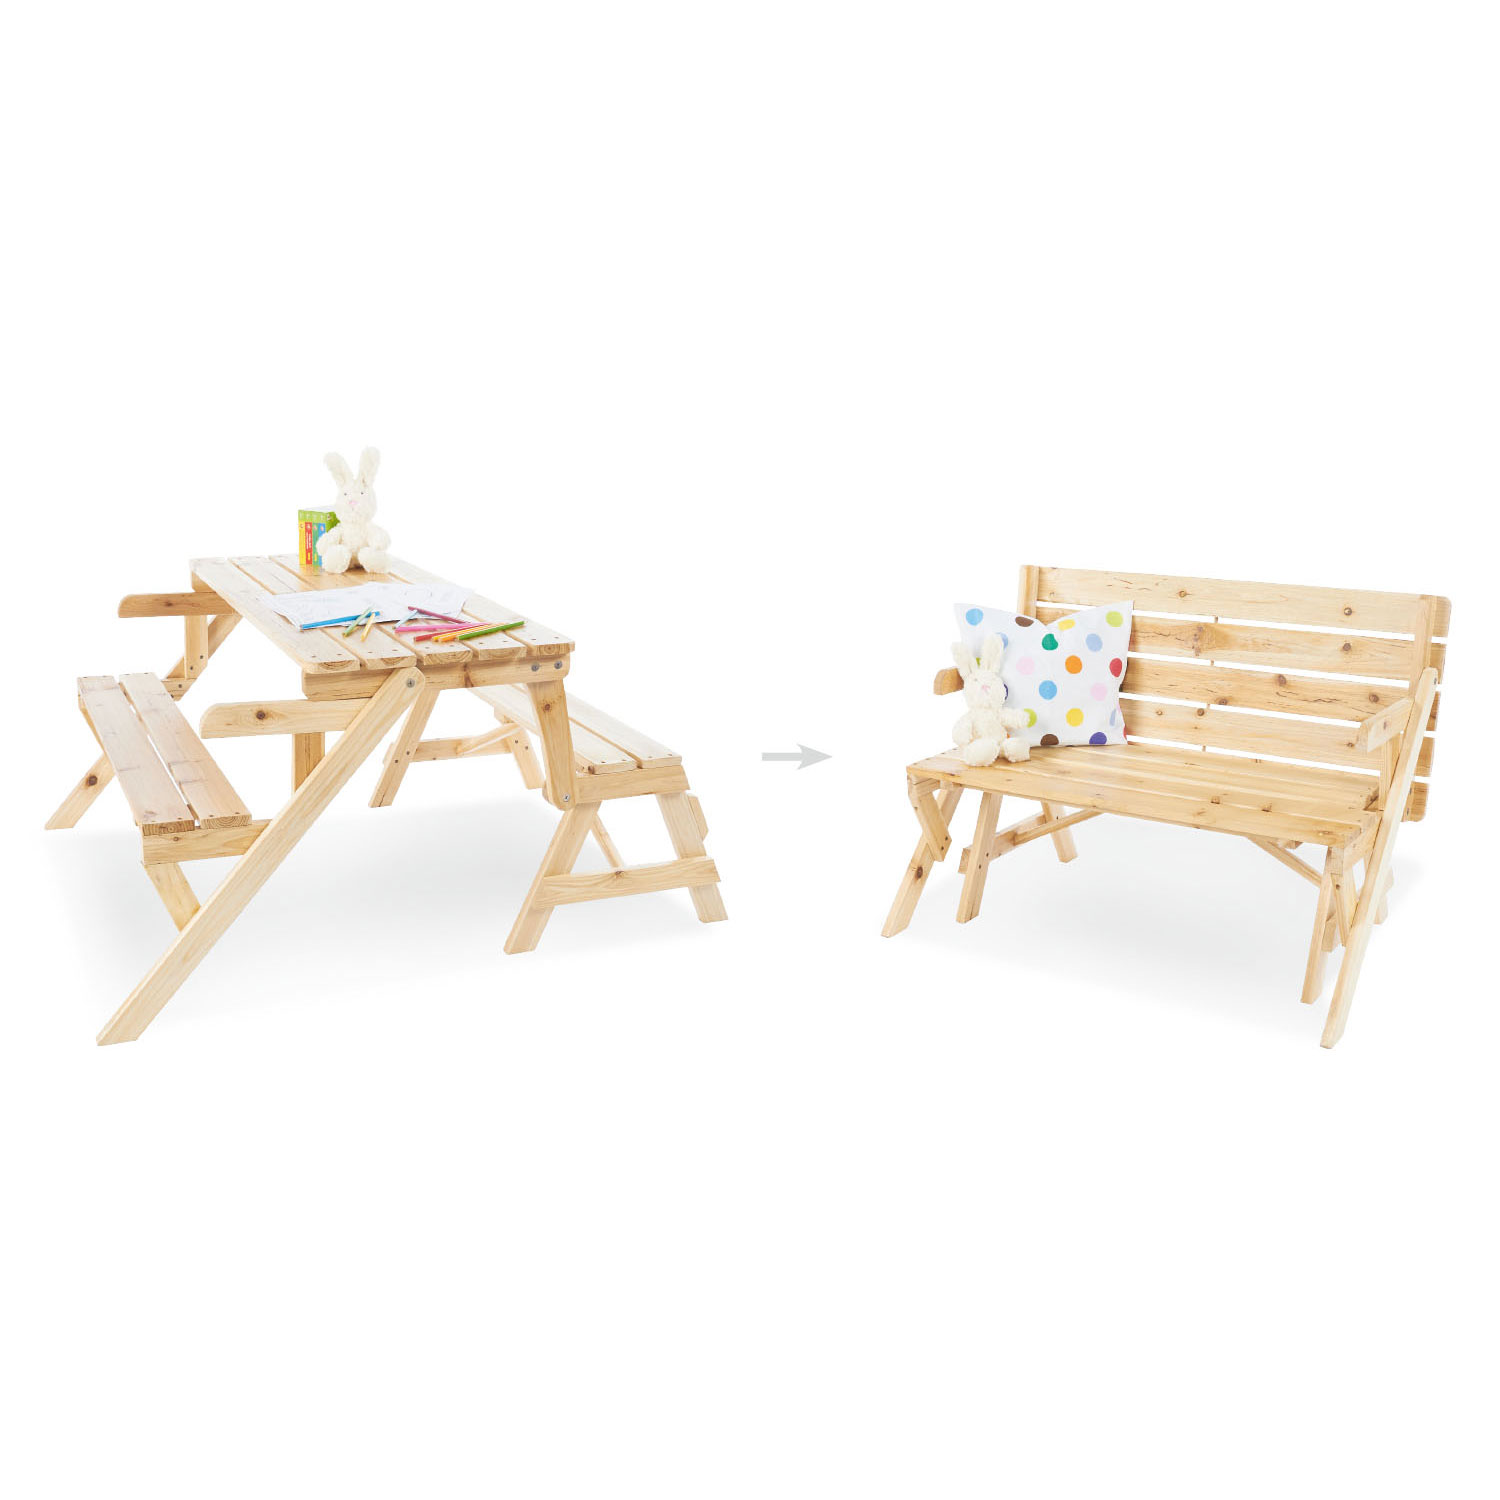 fles Koppeling Kauwgom Pinolino Kindertafel- and Wooden Garden bench, 2in1 | Thimble Toys